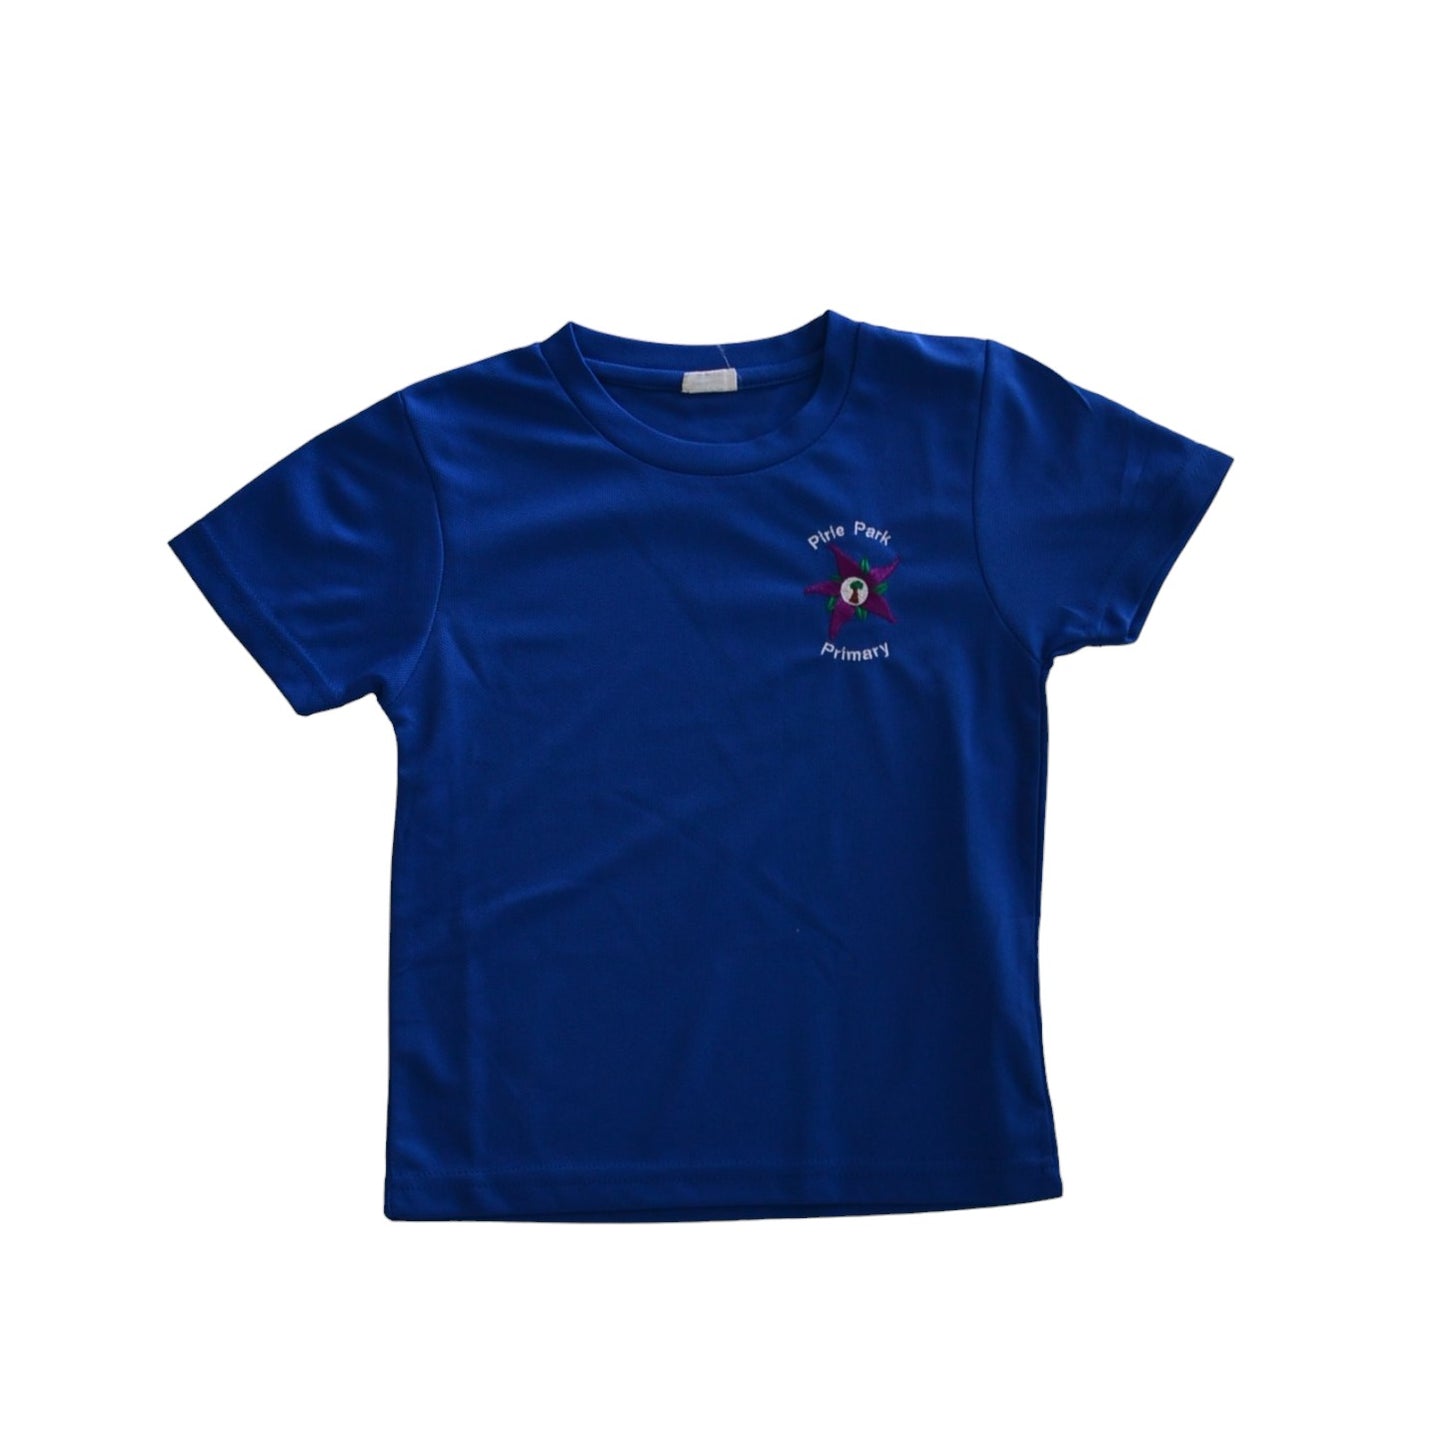 Pirie Park Primary Royal Blue Gym T-shirt Age 5